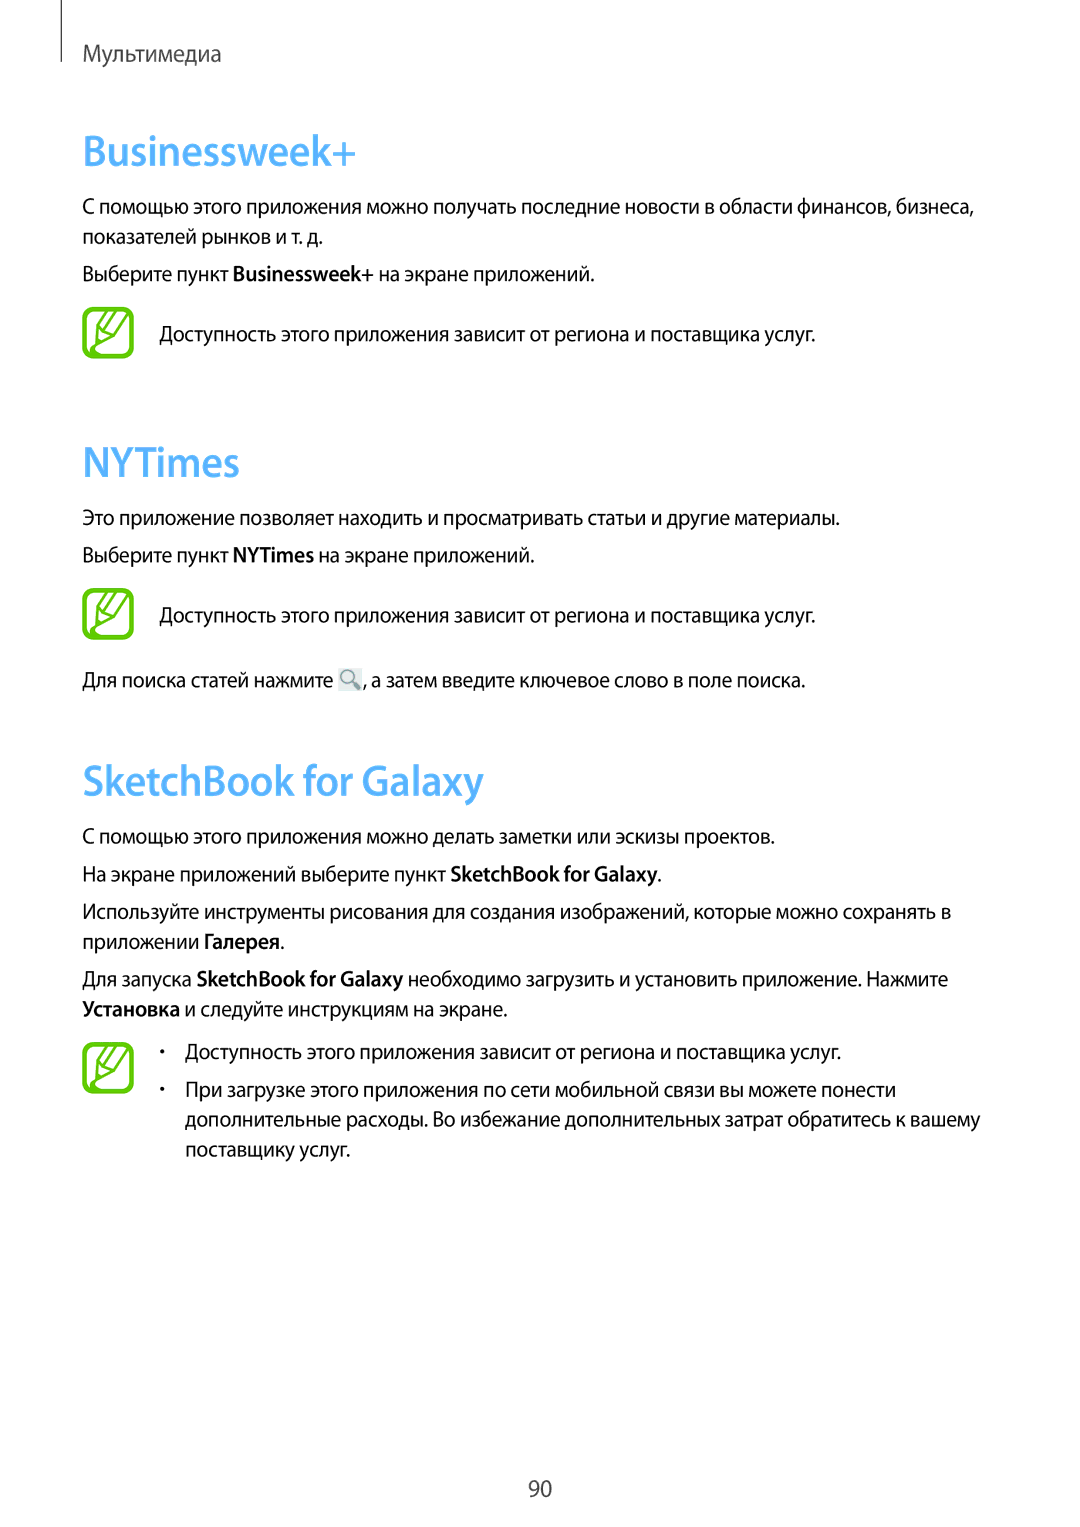 Samsung SM-P6010ZKASER, SM-P6010ZKESER, SM-P6010ZKAMGF, SM-P6010ZKEMGF manual Businessweek+, NYTimes, SketchBook for Galaxy 